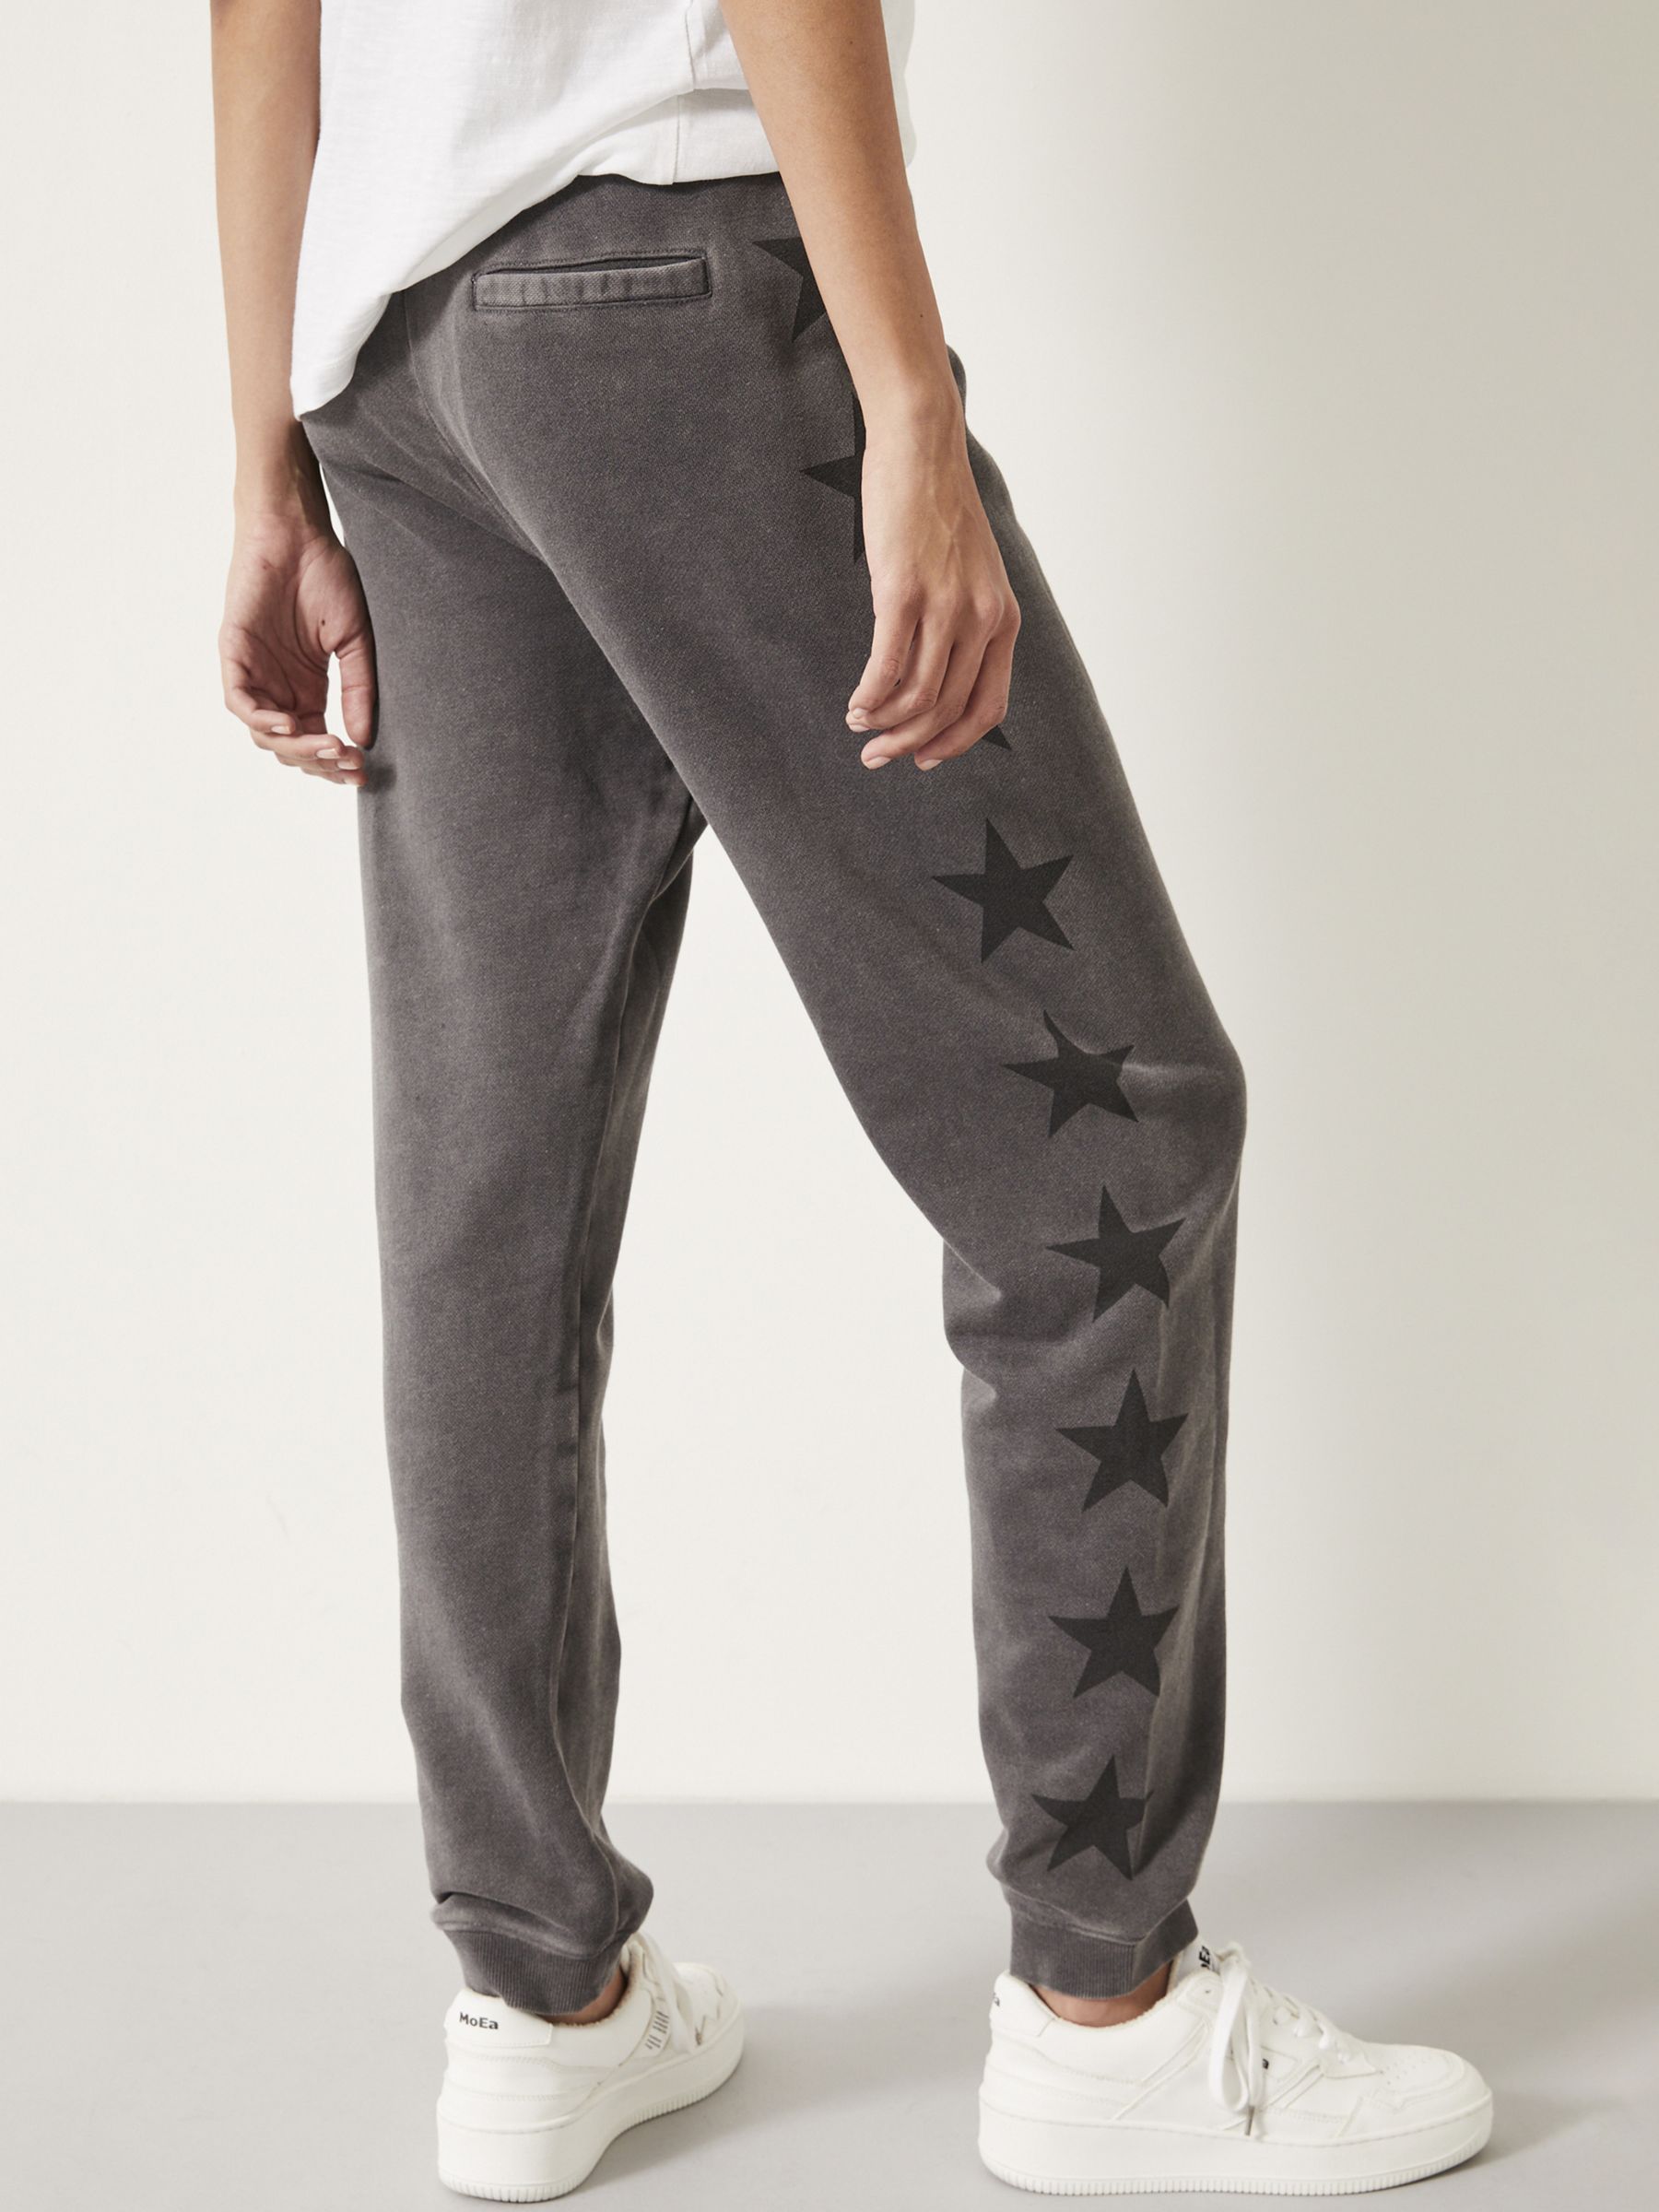 Star Print Slim Leg Joggers in Grey Marl from hush